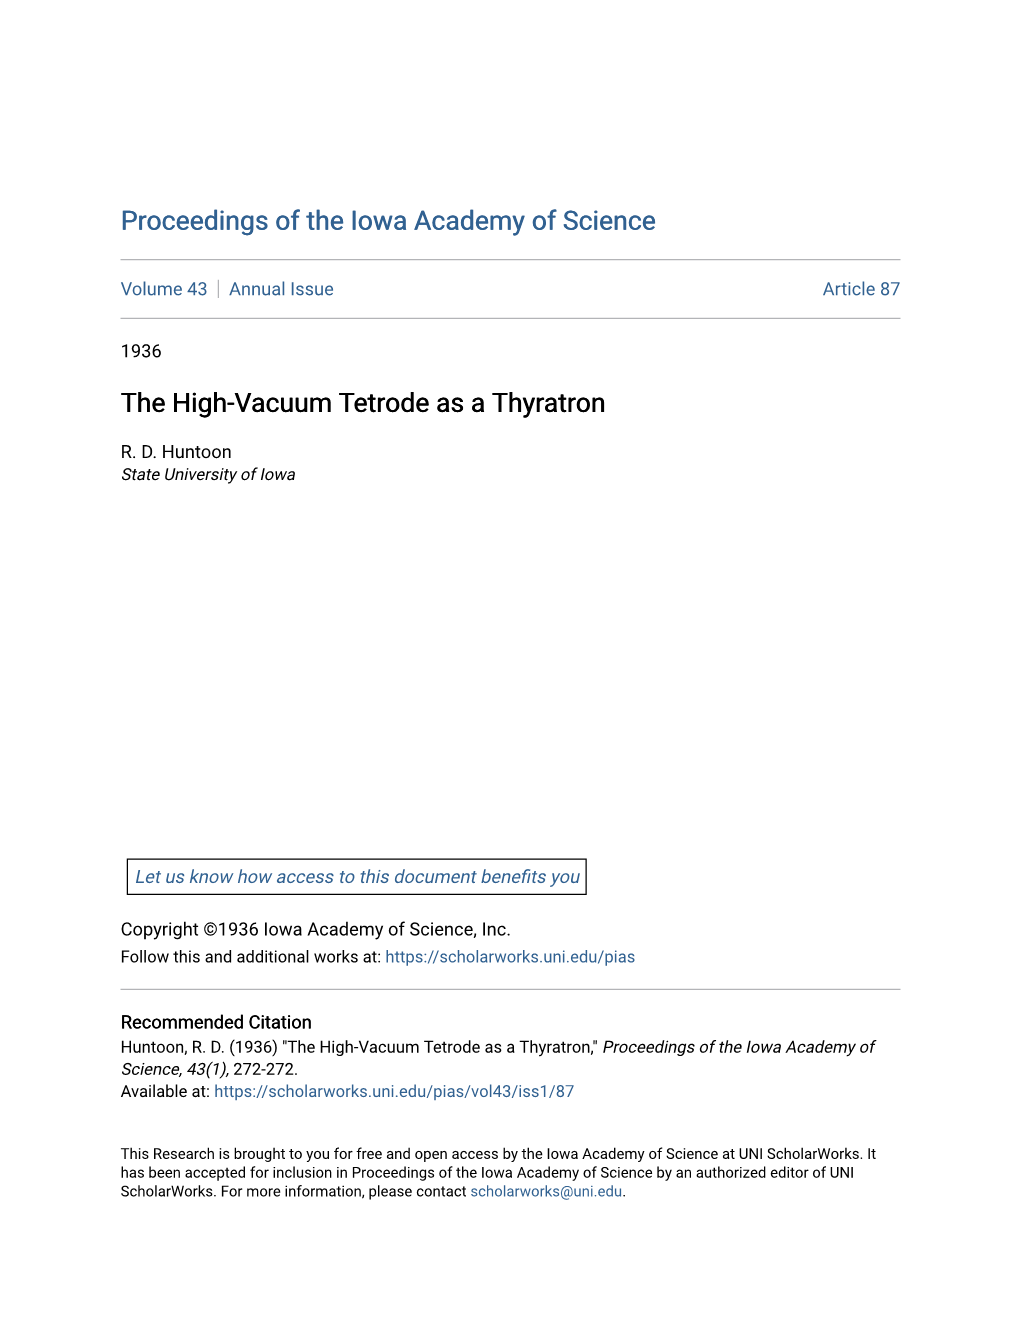 The High-Vacuum Tetrode As a Thyratron